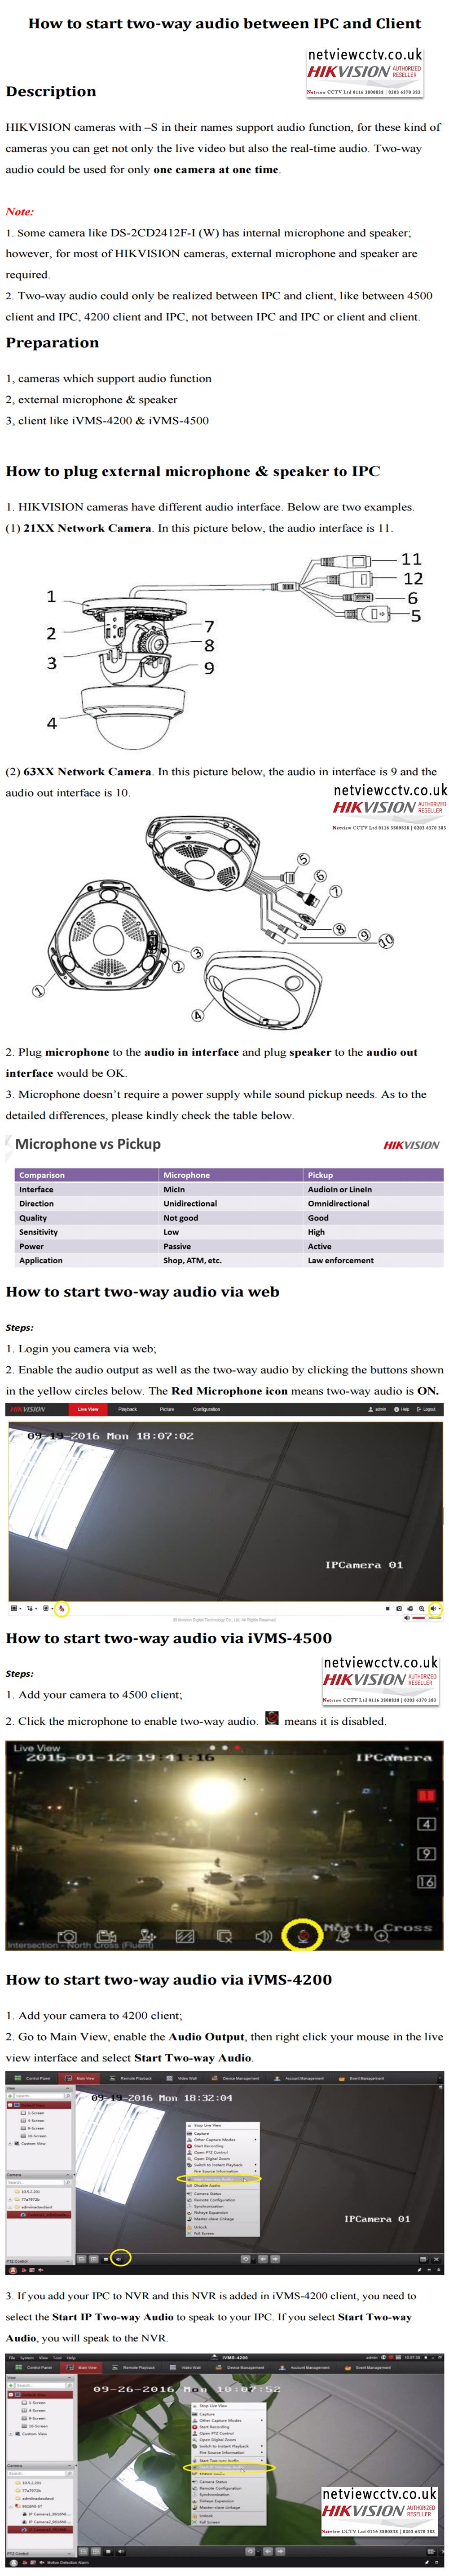 How do I Setup 2-Way audio between a Hikvision IP Camera & Software or App?